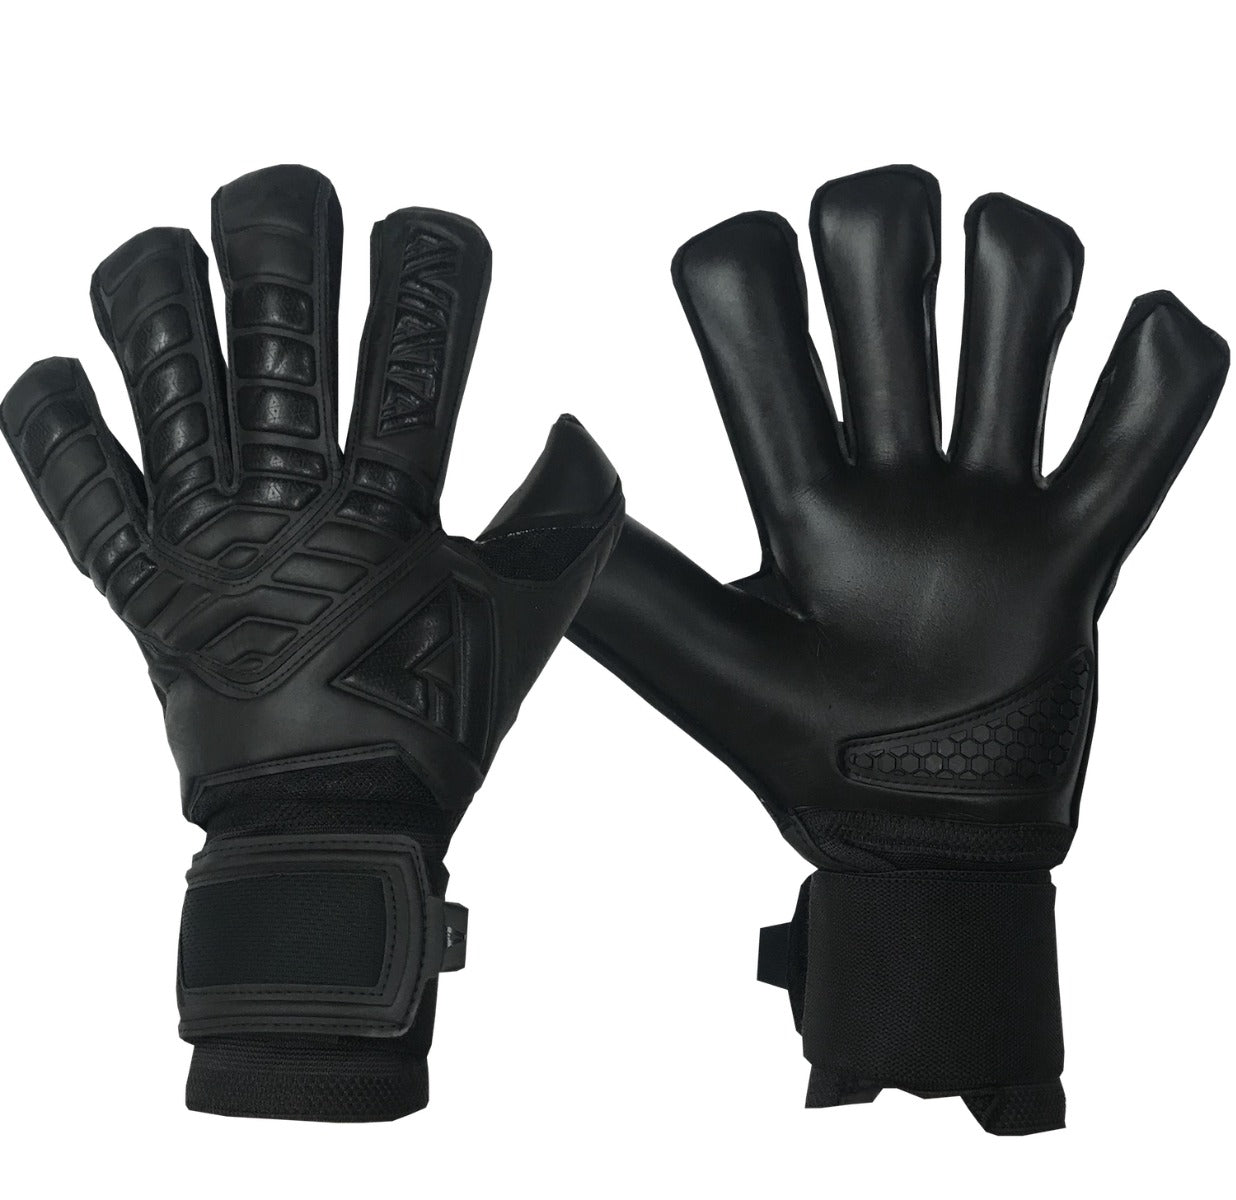 Aviata Youth Halcyon Turf Blackout Goalkeeper Gloves - Black (Pair)